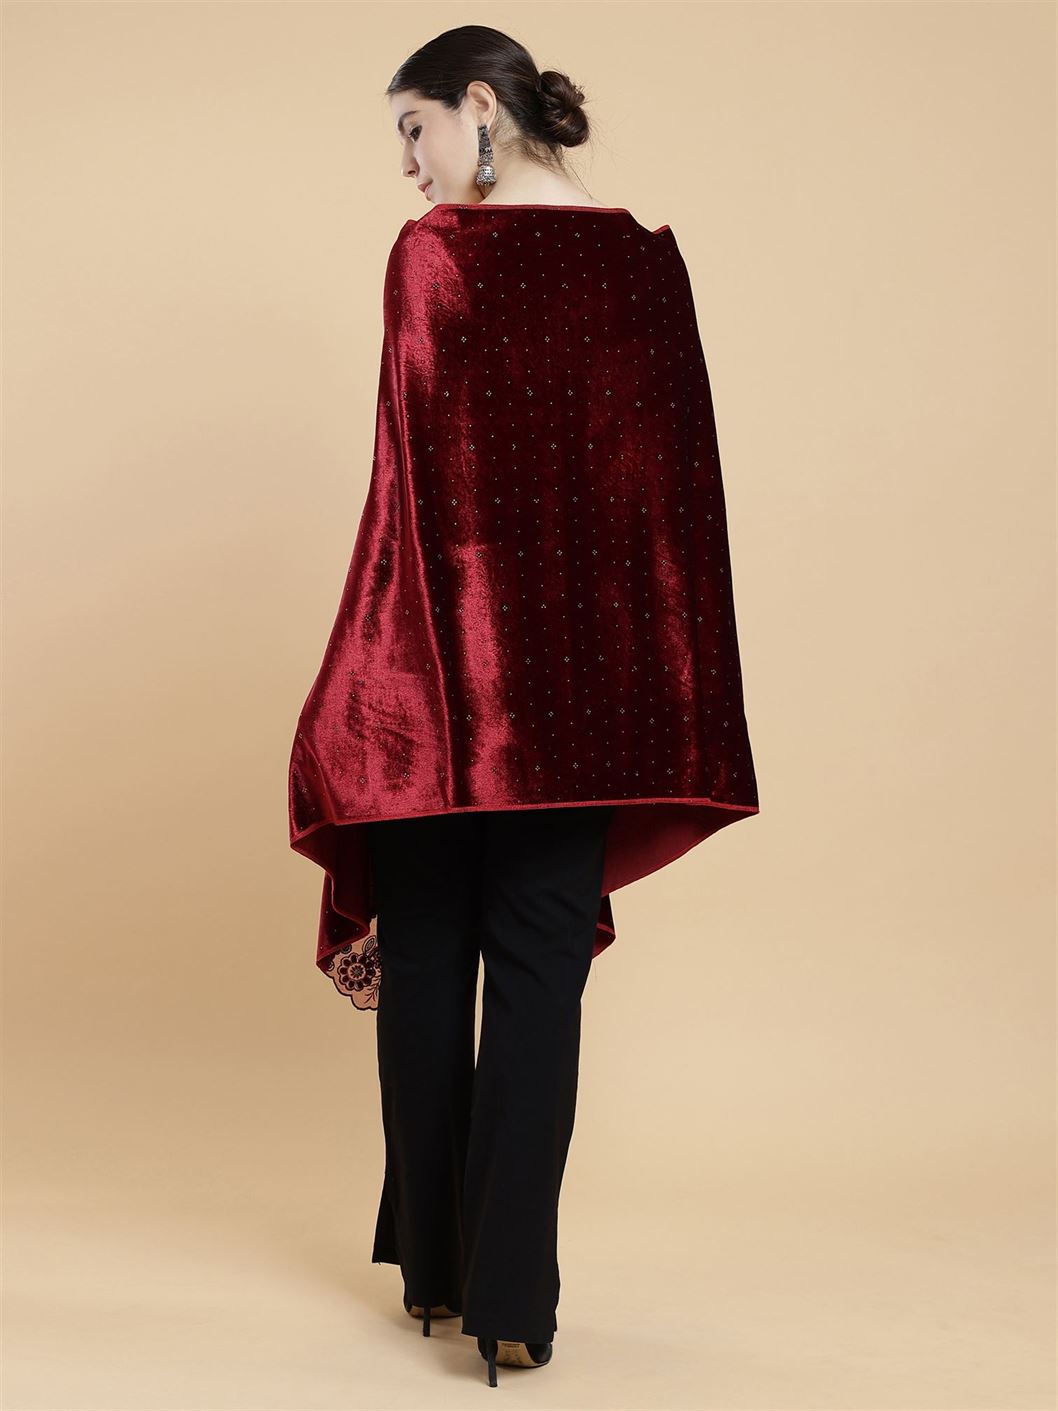 maroon-embellished-velvet-stole-mchsvd1612m-moda-chales-8